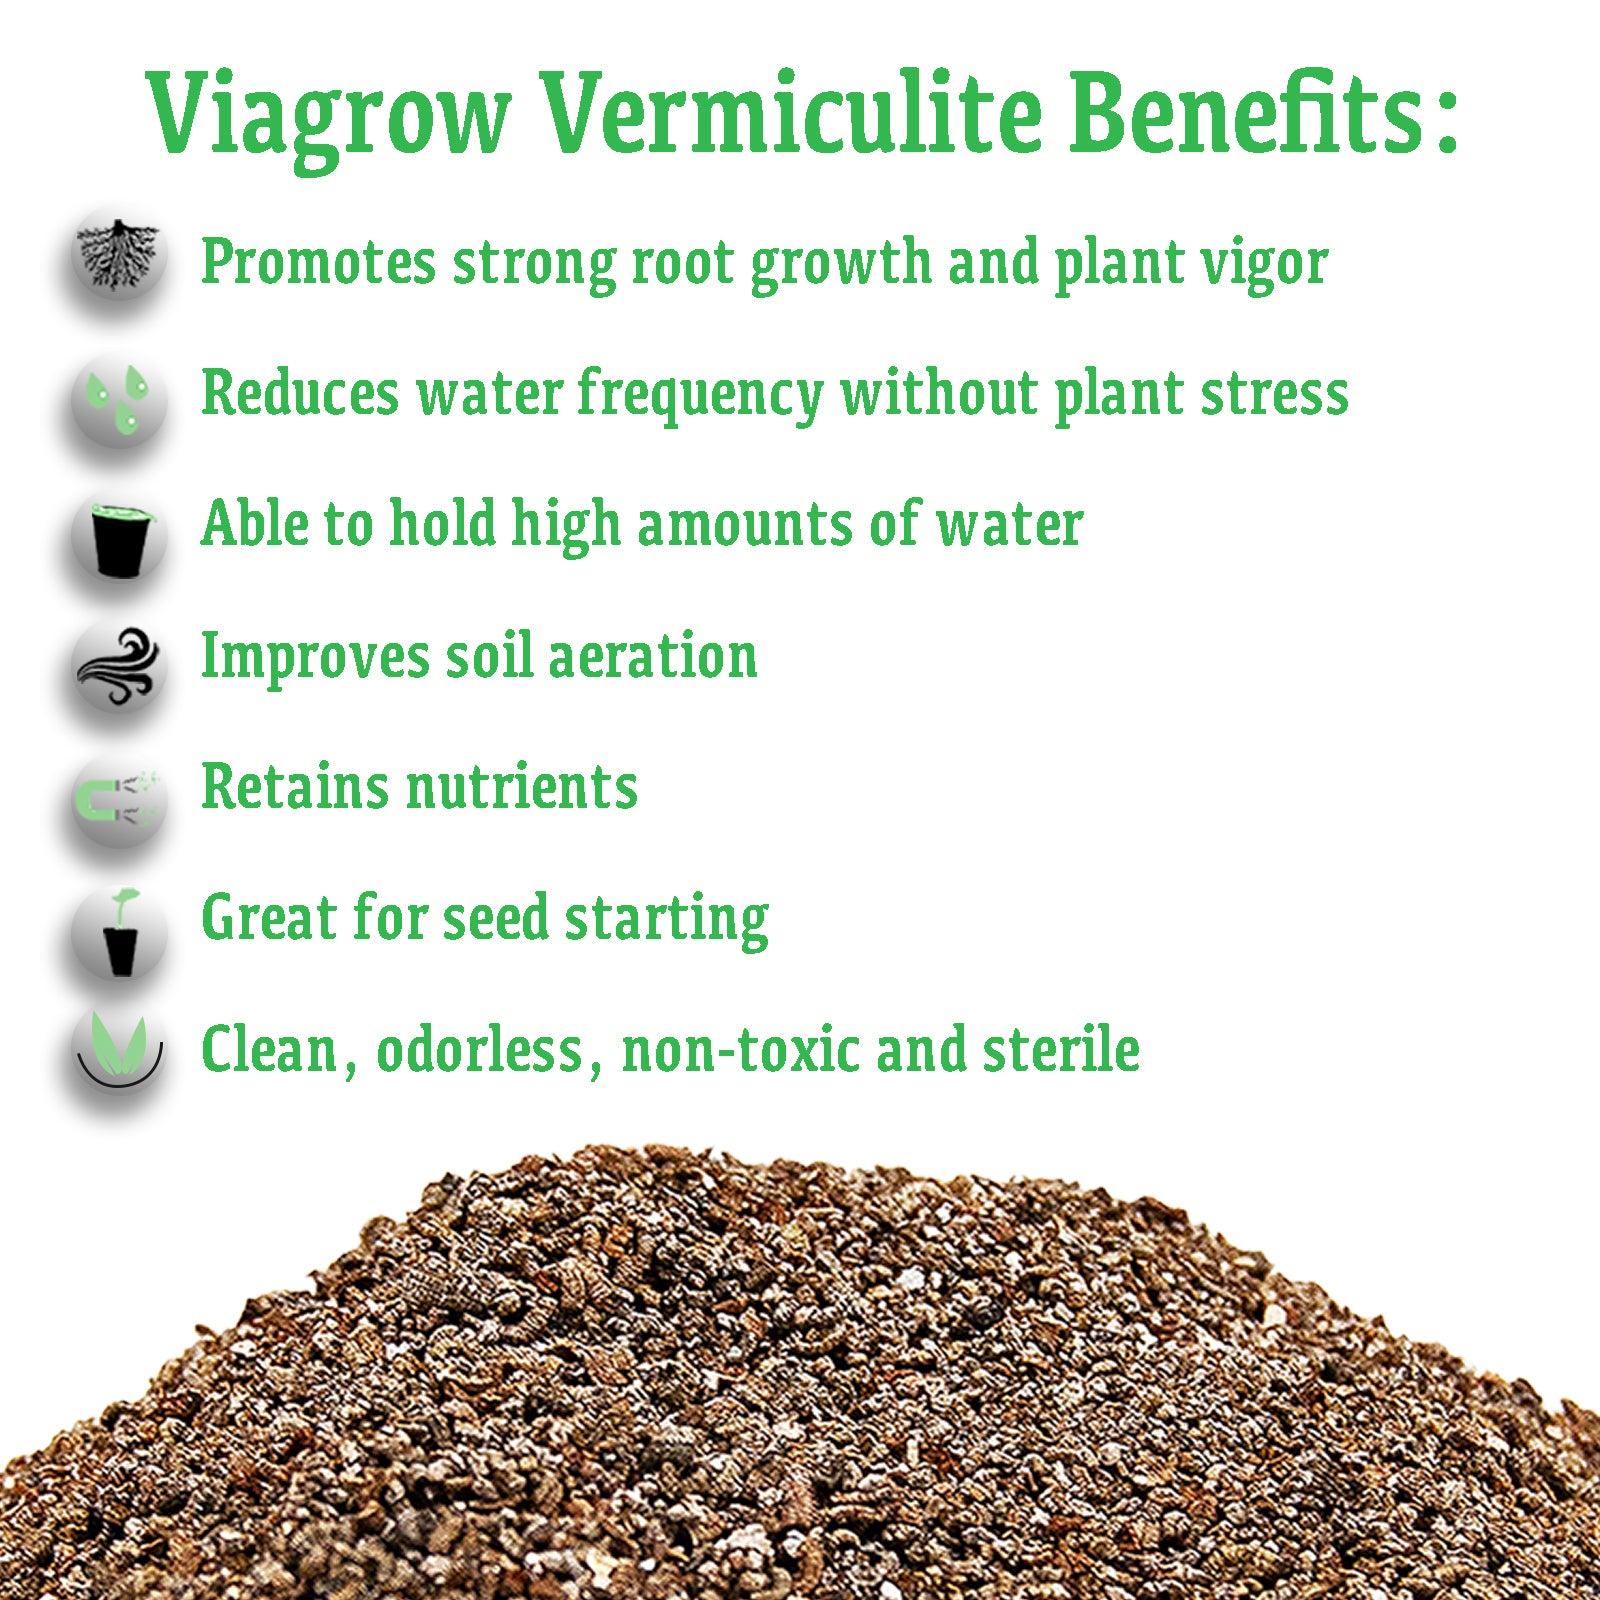 Viagrow 4 cu. ft./29.9 Gal./113 l Vermiculita hortícola (paquete de 33)